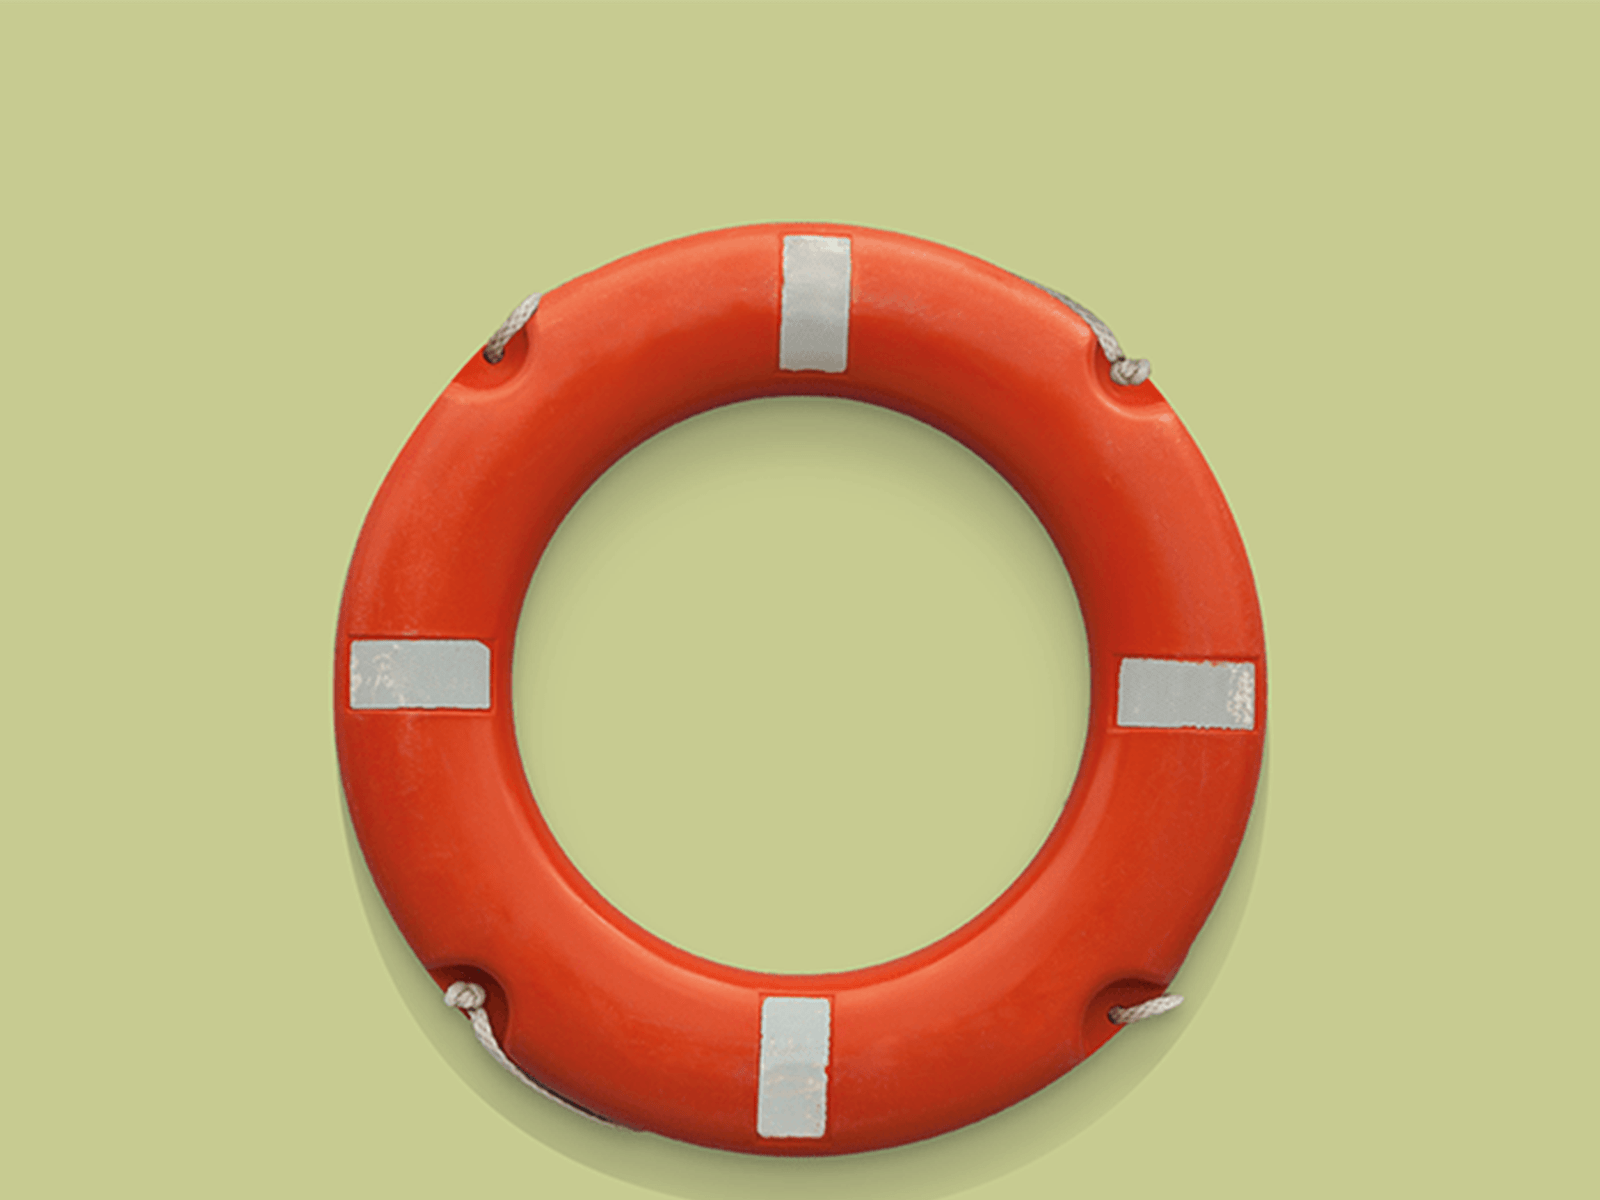 A life buoy